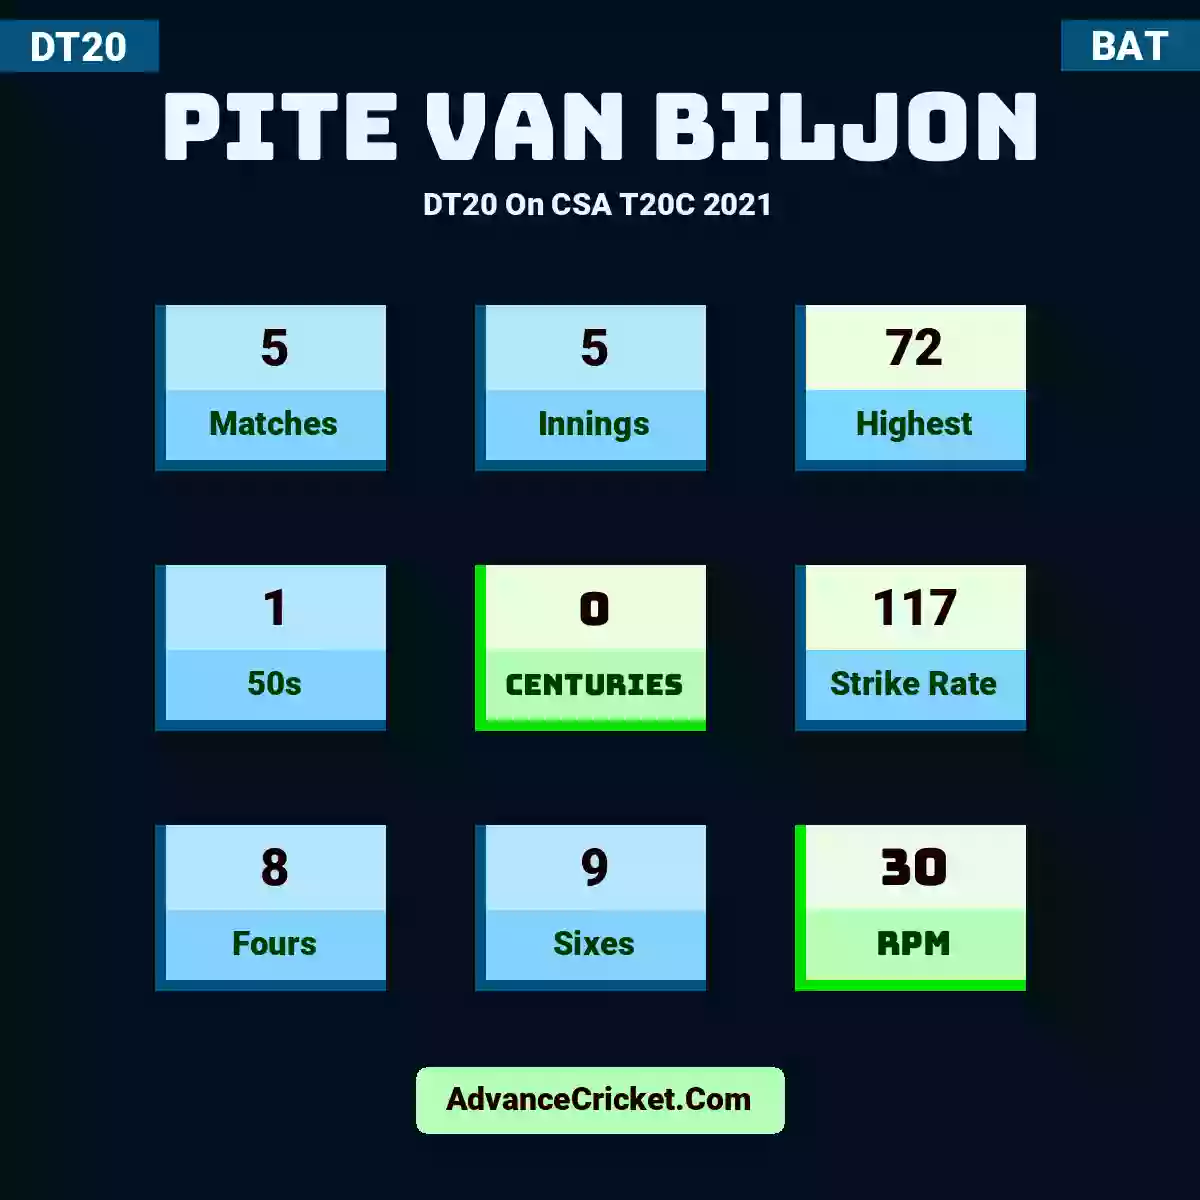 Pite van Biljon DT20  On CSA T20C 2021, Pite van Biljon played 5 matches, scored 72 runs as highest, 1 half-centuries, and 0 centuries, with a strike rate of 117. P.van Biljon hit 8 fours and 9 sixes, with an RPM of 30.